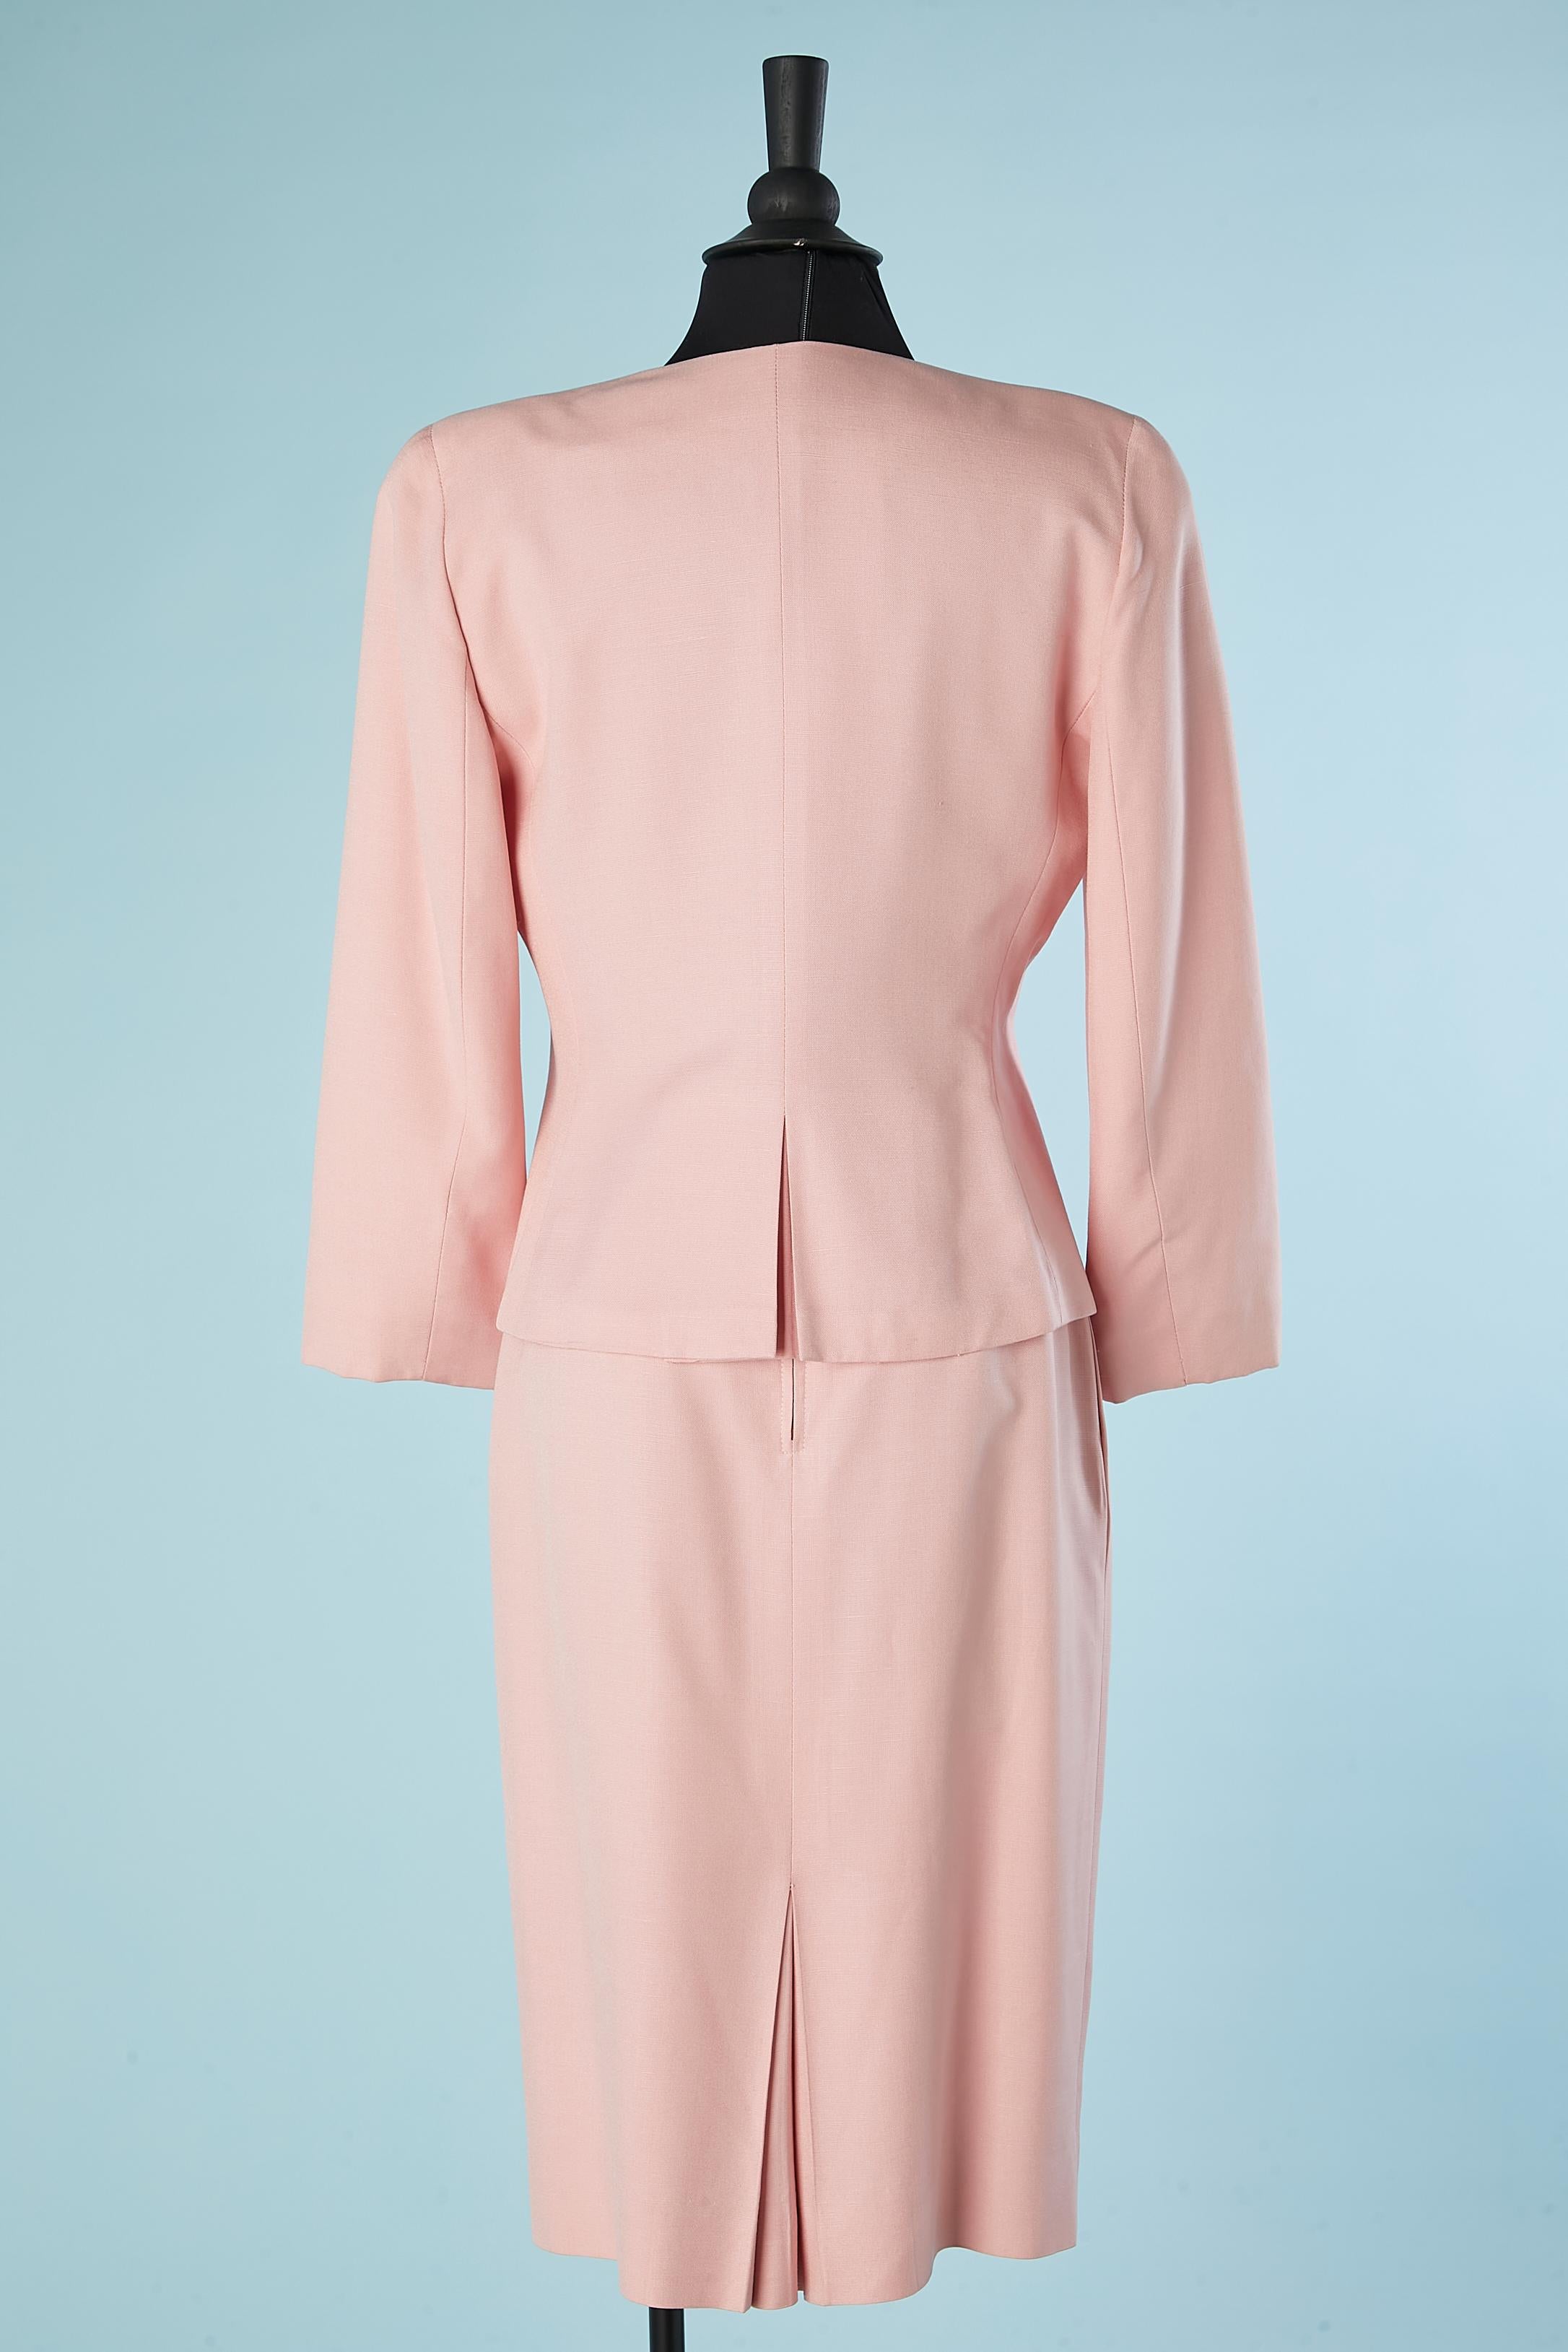 Combinaison-jupe rose avec bouton en nacre - Costume Christian Dior 